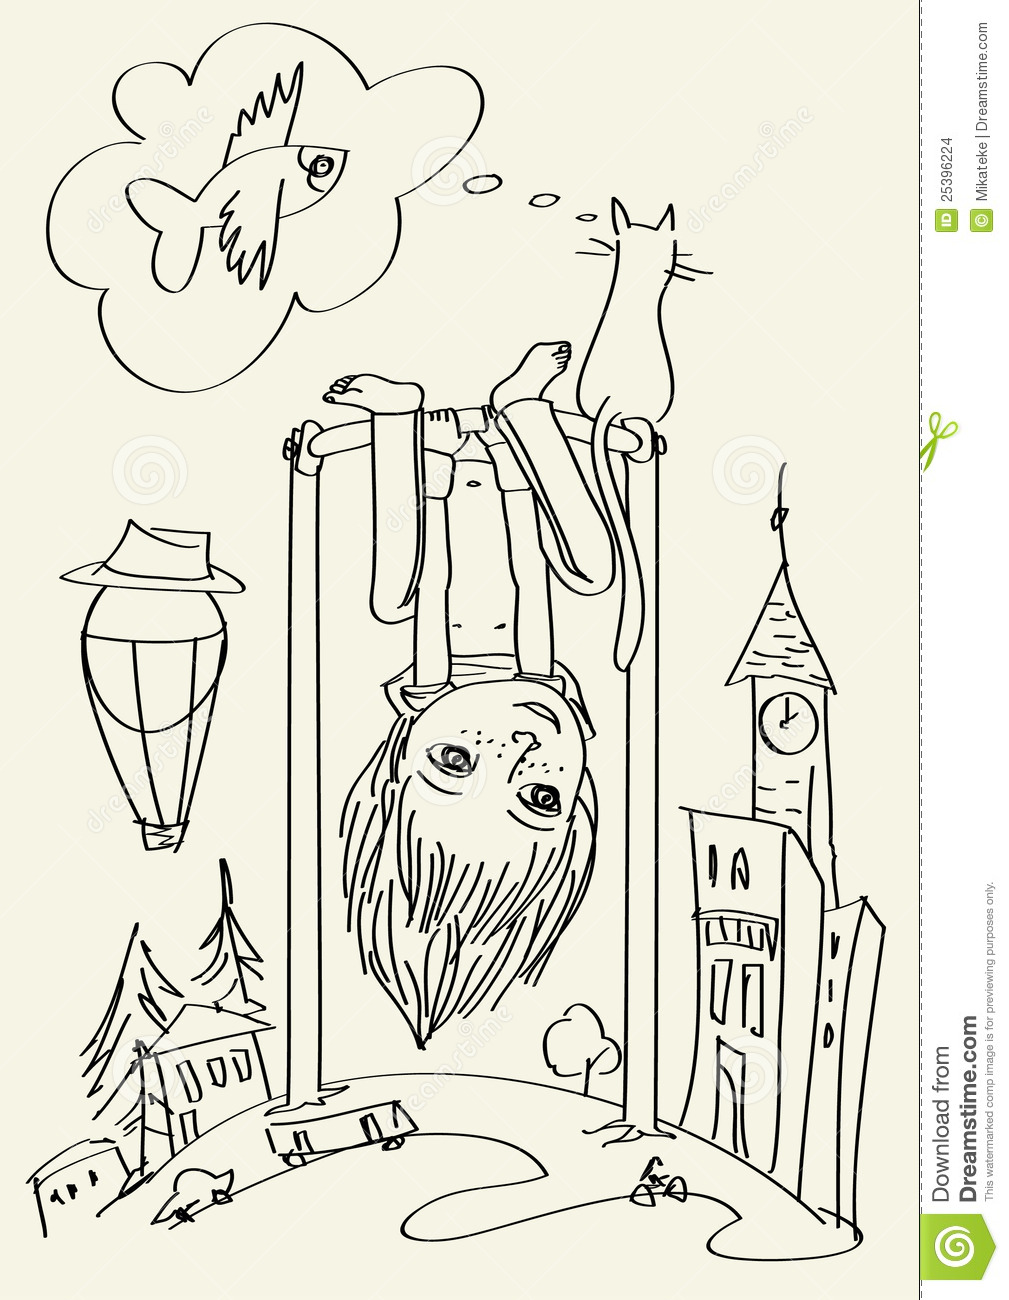 Surreal Sketch Illustration Of A Boy Upside Down On The Horizontal Bar